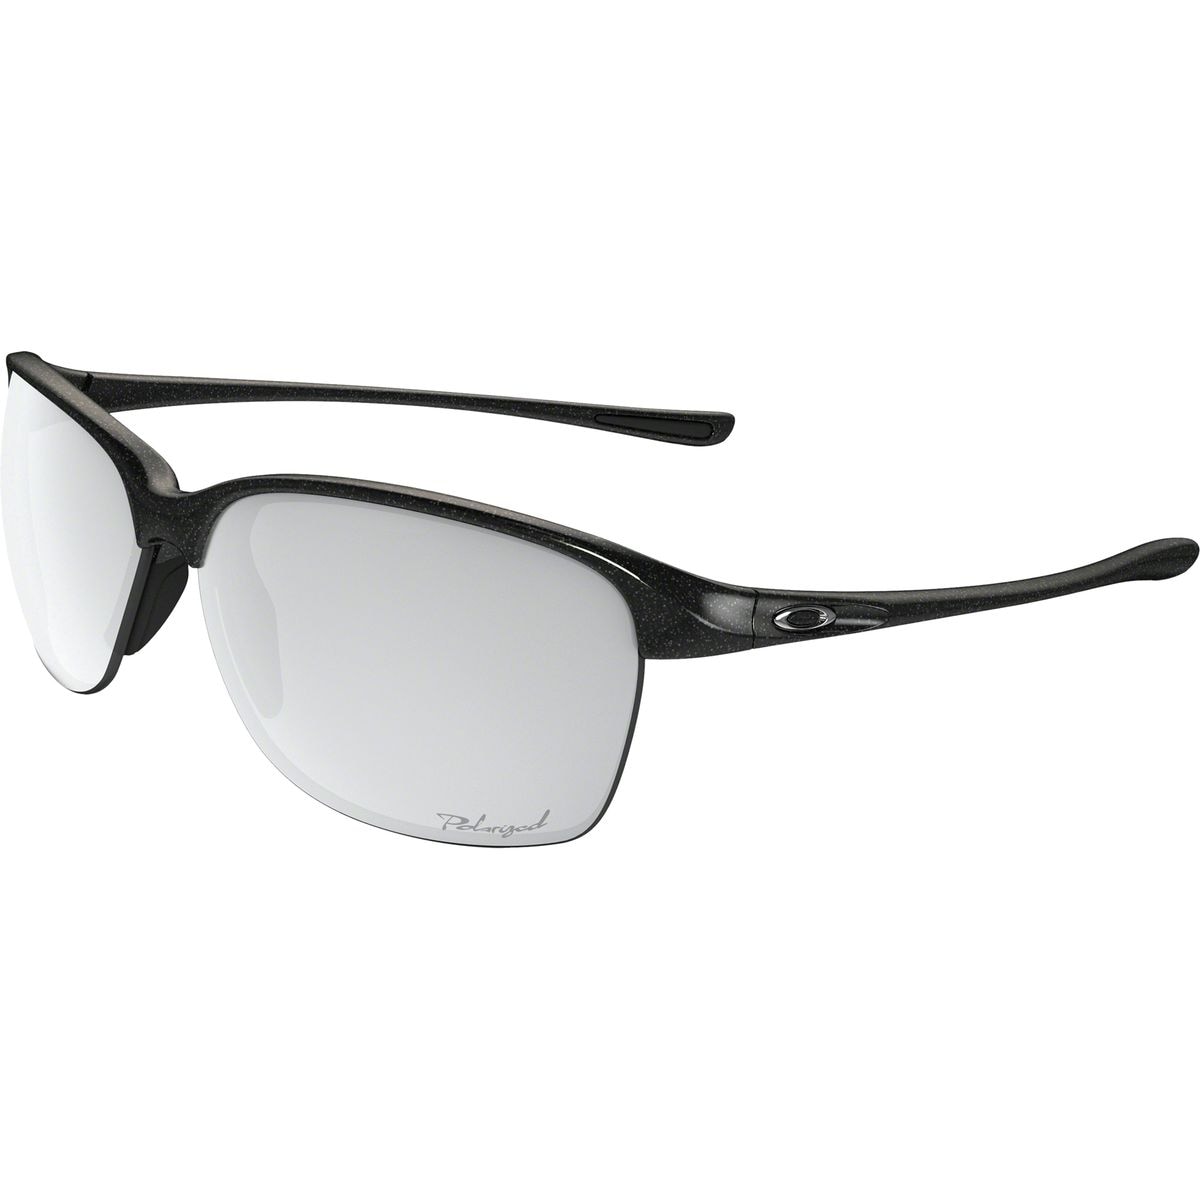 Oakley Unstoppable Polarized Sunglasses - Women's Metallic Black/Chrome Irid Polar One Size